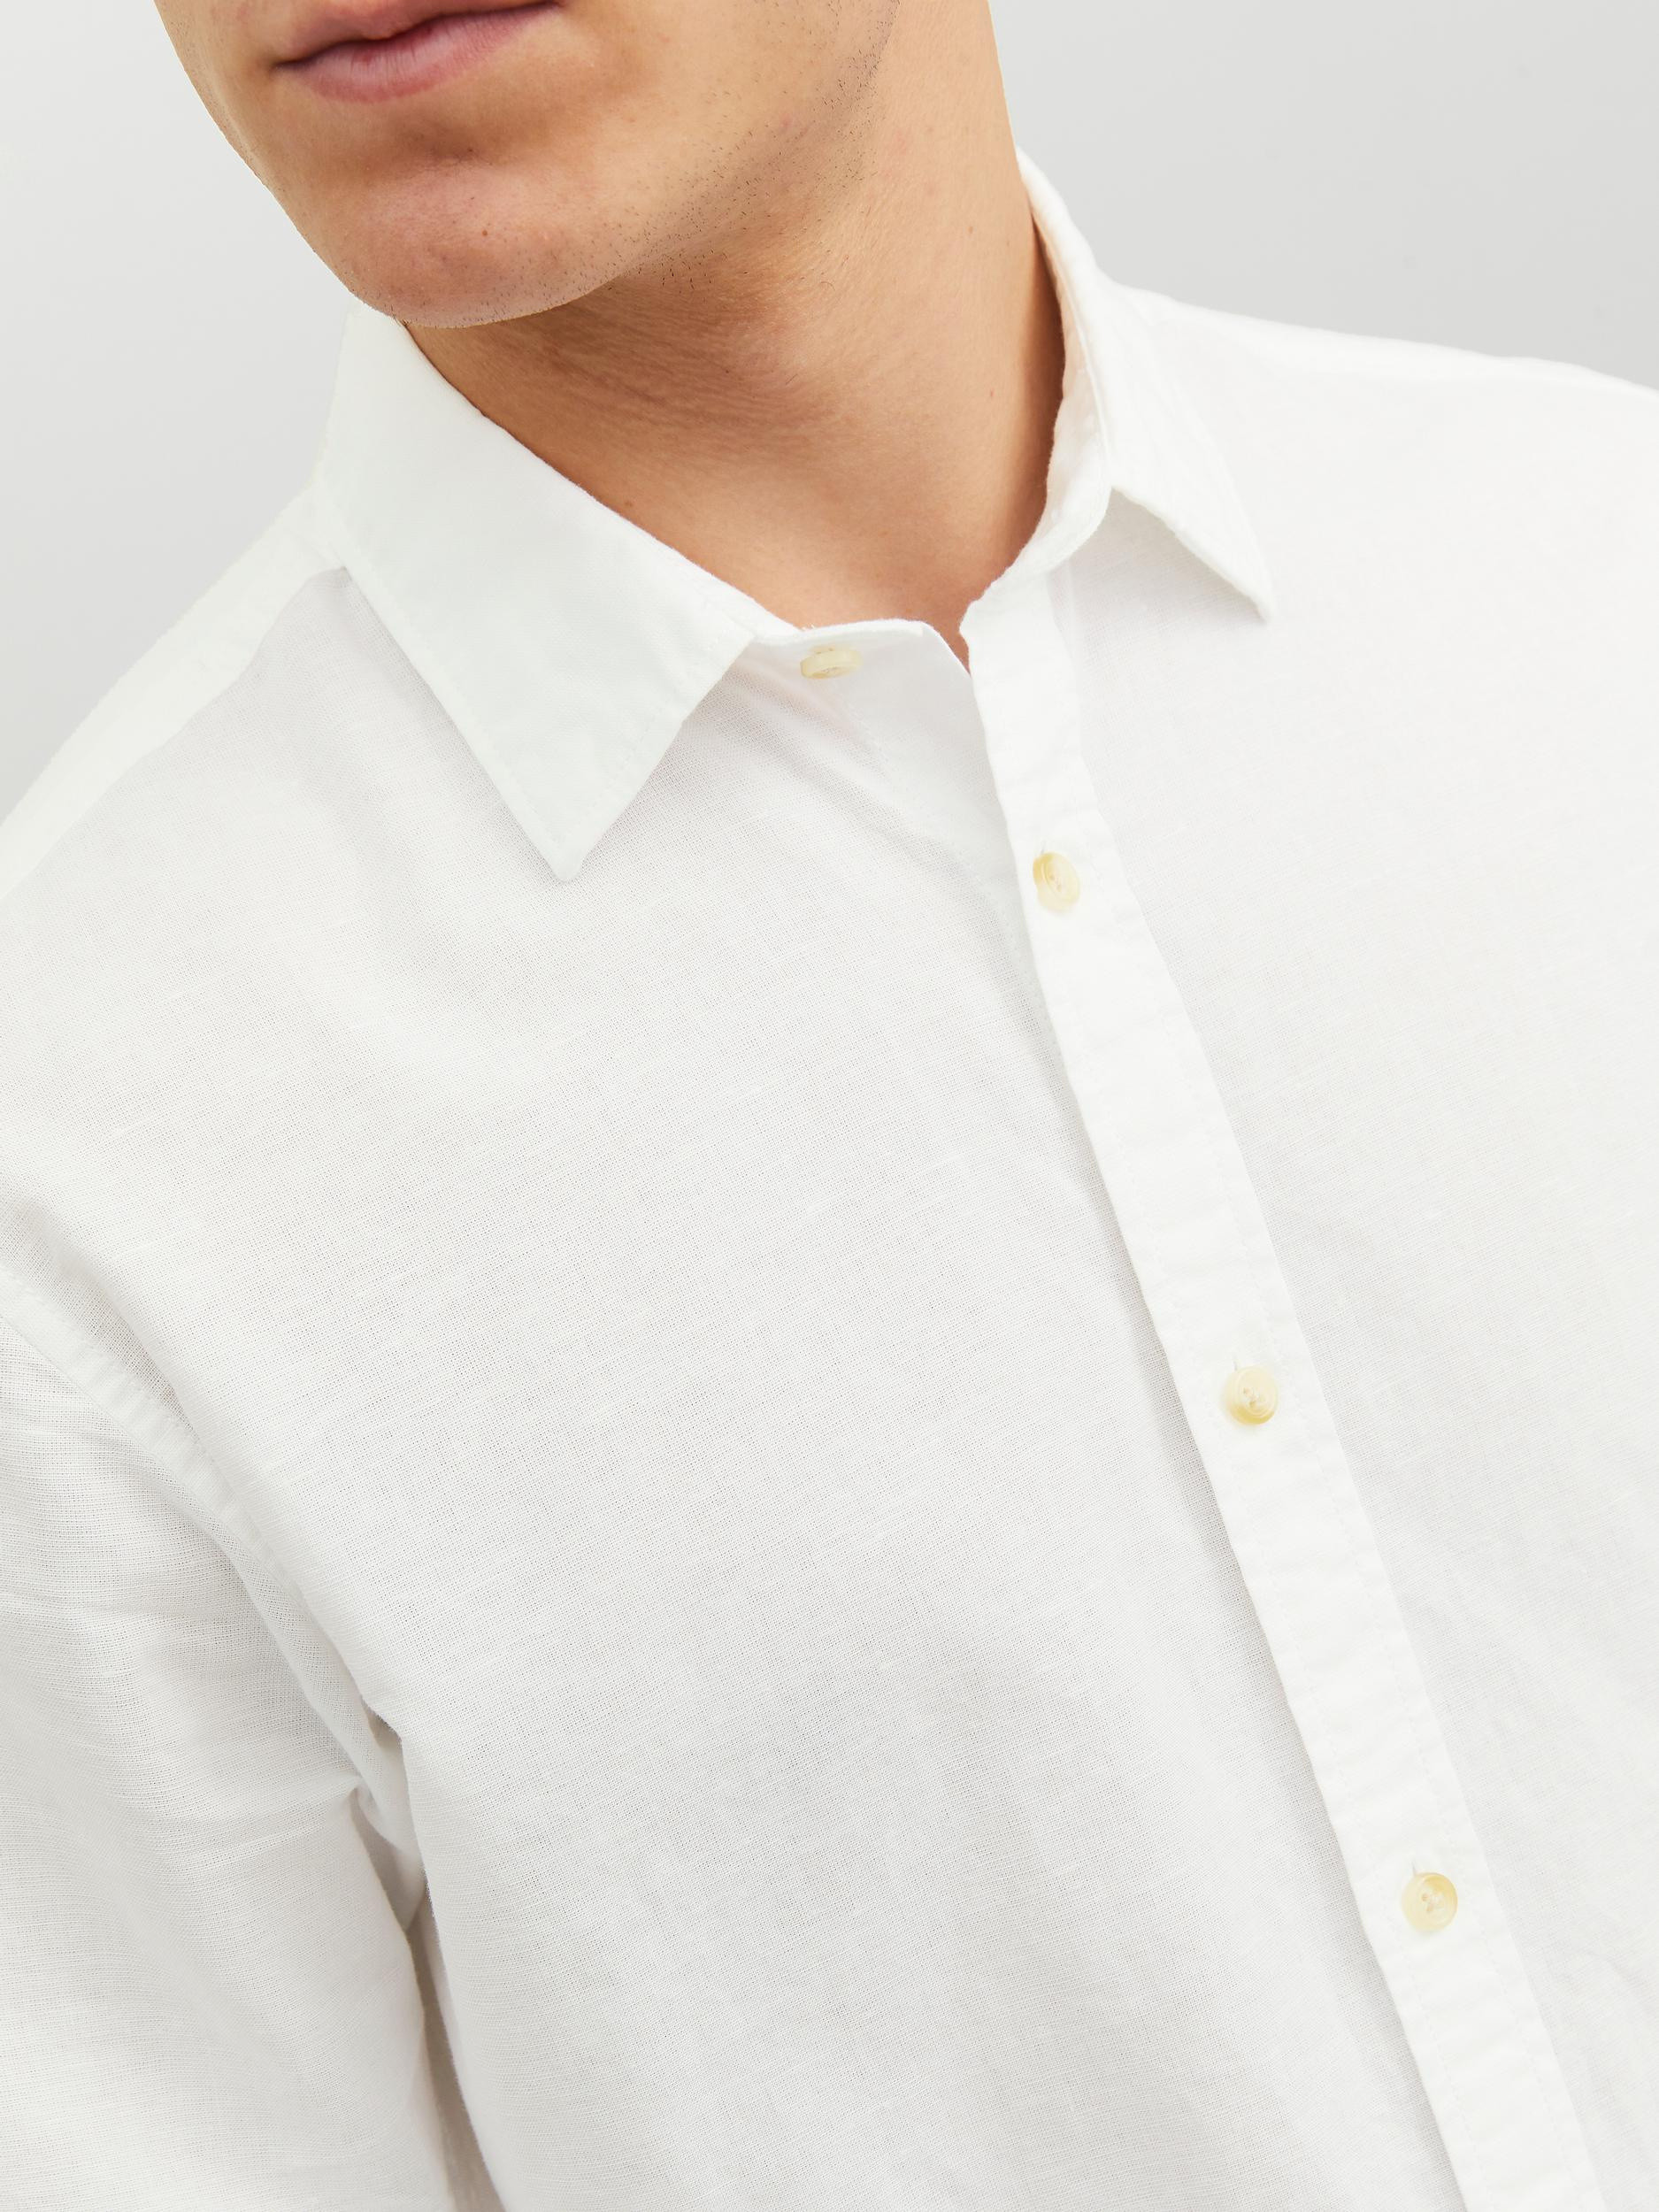 Jack & Jones - Camicia slim fit, Bianco, large image number 6